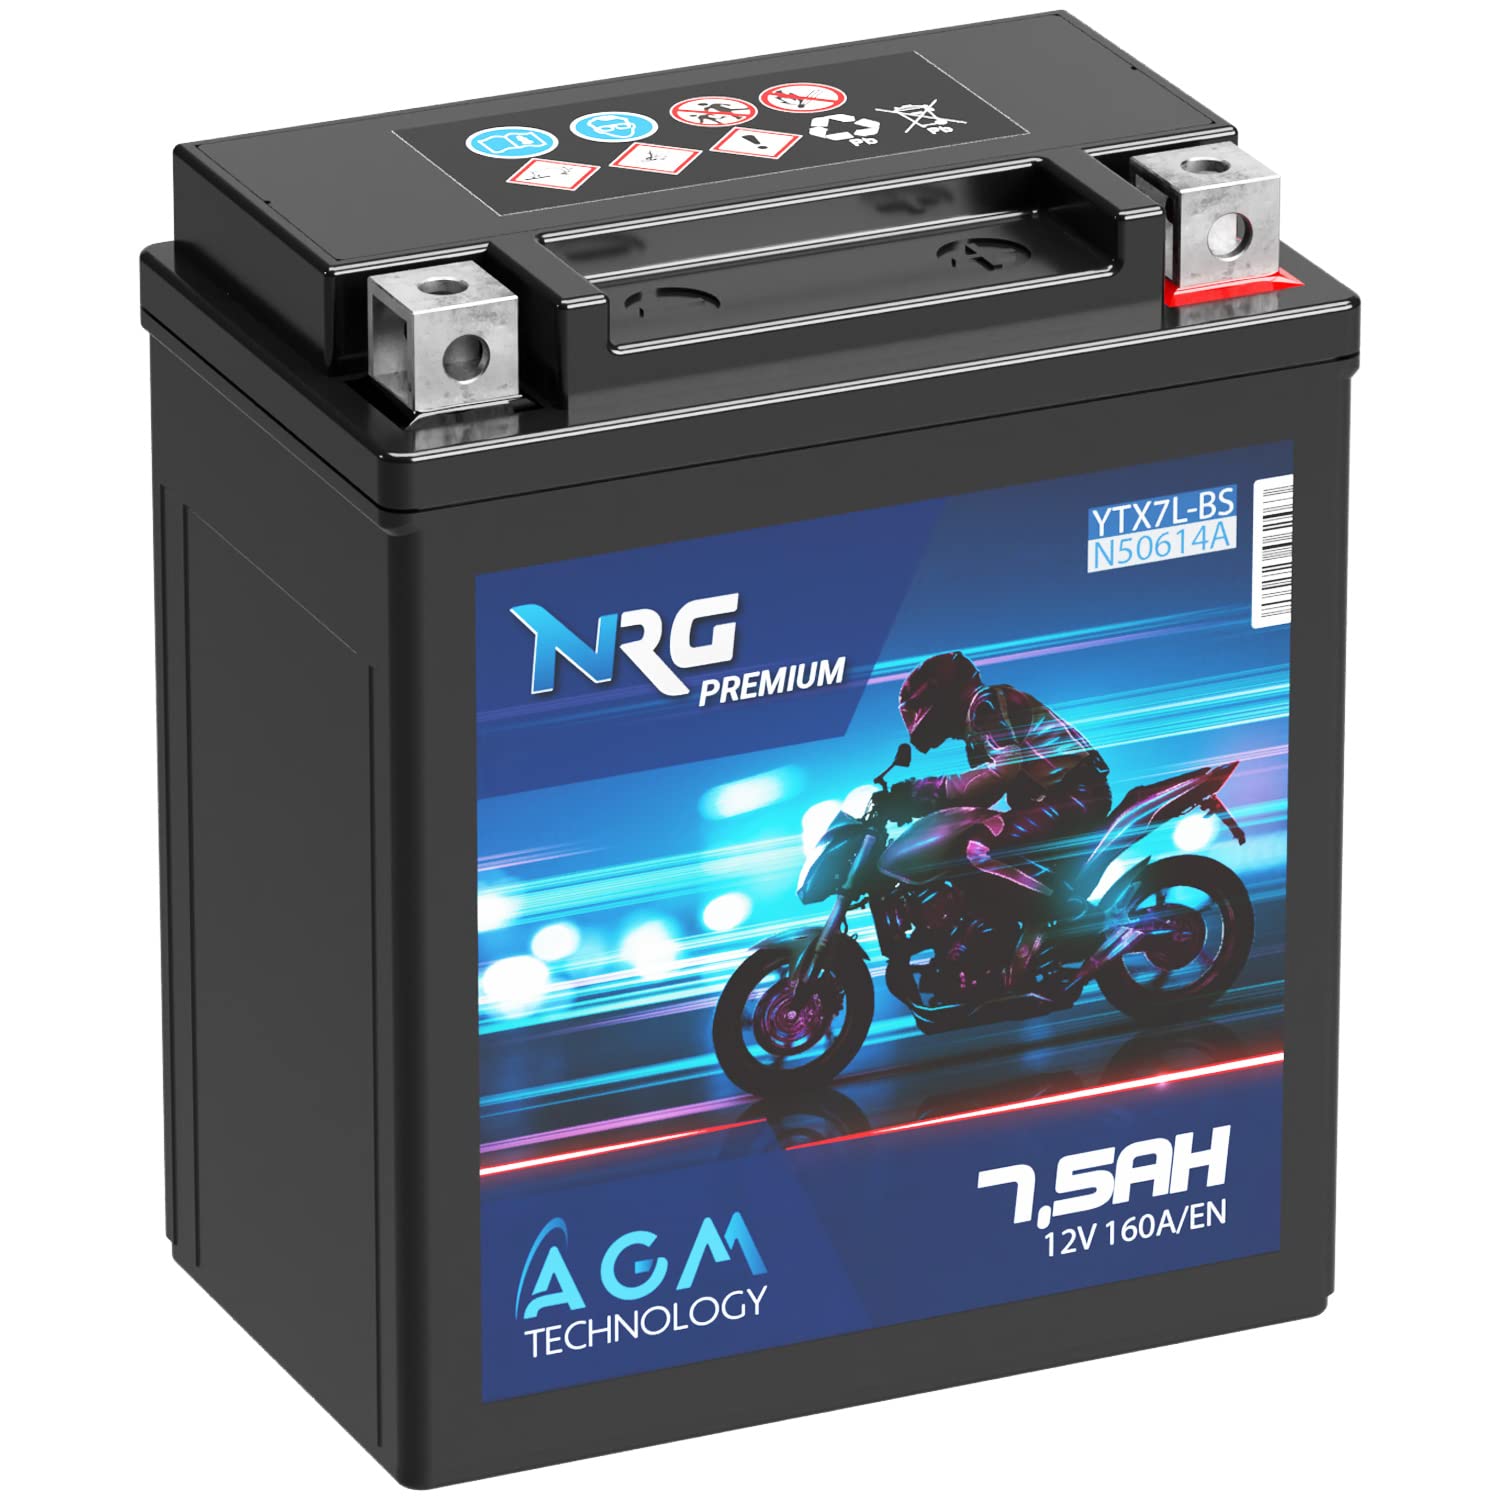 NRG Premium YTX7L-BS AGM Motorradbatterie 7,5Ah 12V 160A/EN Batterie 50614 CTX7L-BS auslaufsicher wartungsfrei ersetzt 6Ah von NRG PREMIUM